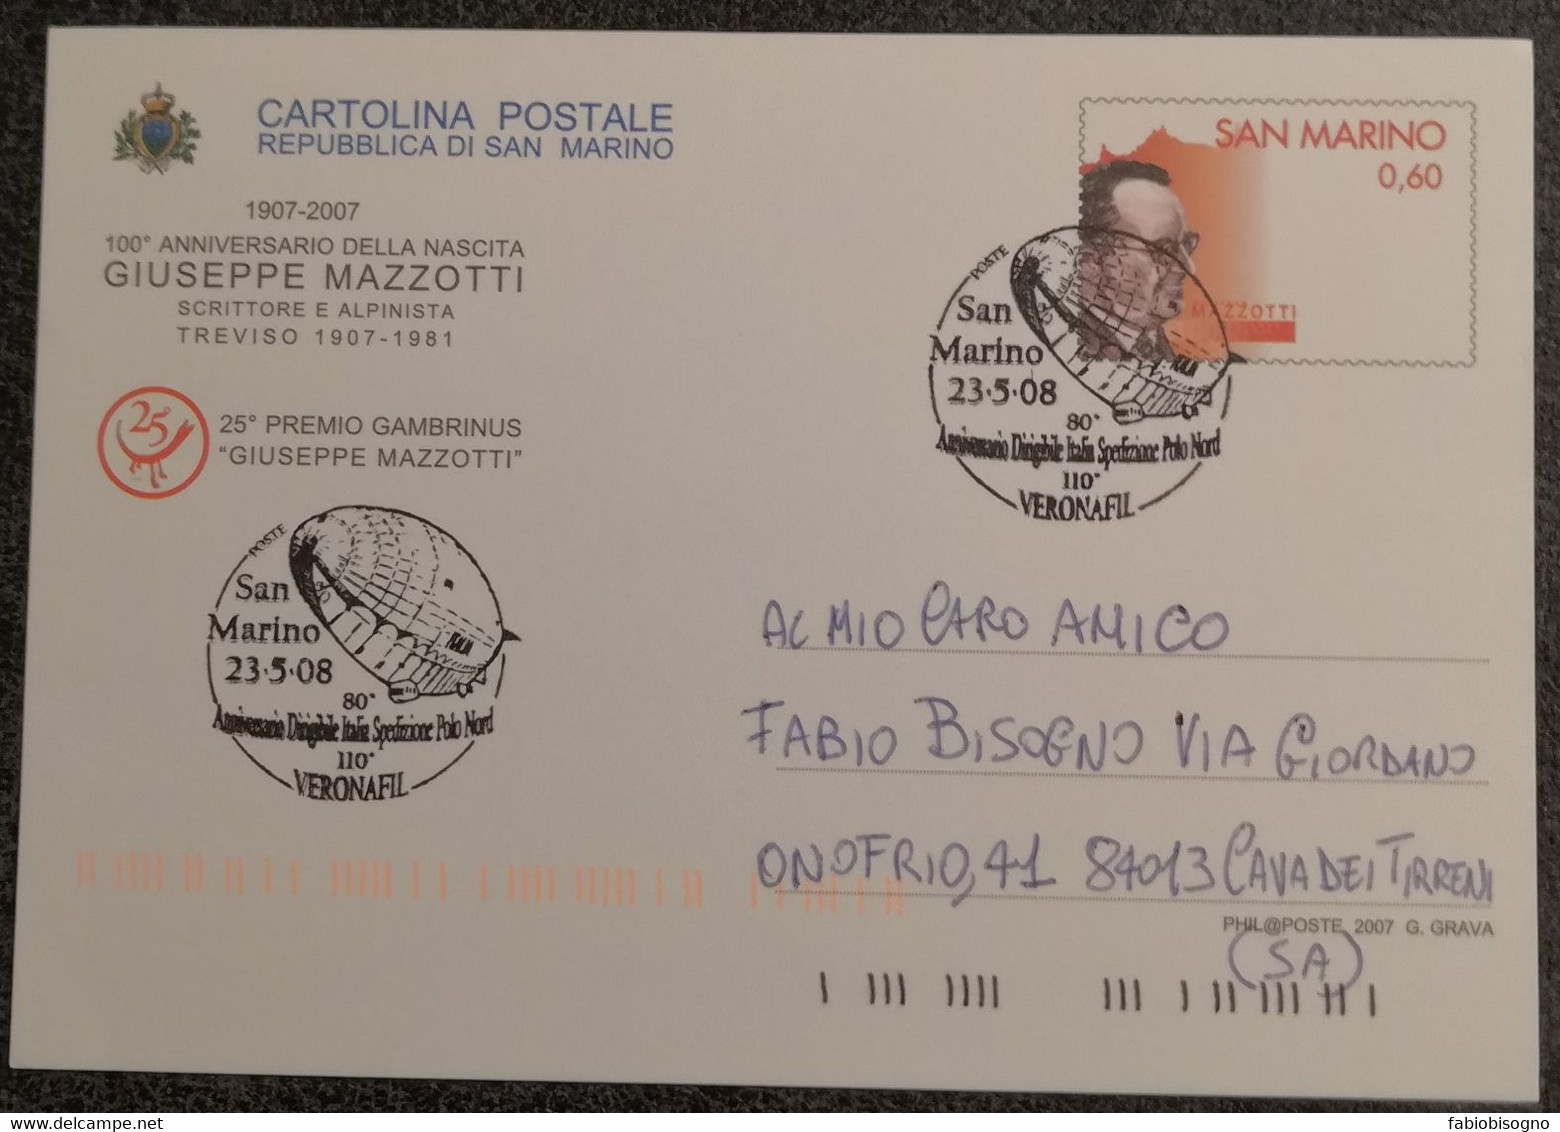 San MArino 23.5.2008 - MAZZOTTI € 0,60 - Cartolina Postale Viaggiata - Lettres & Documents